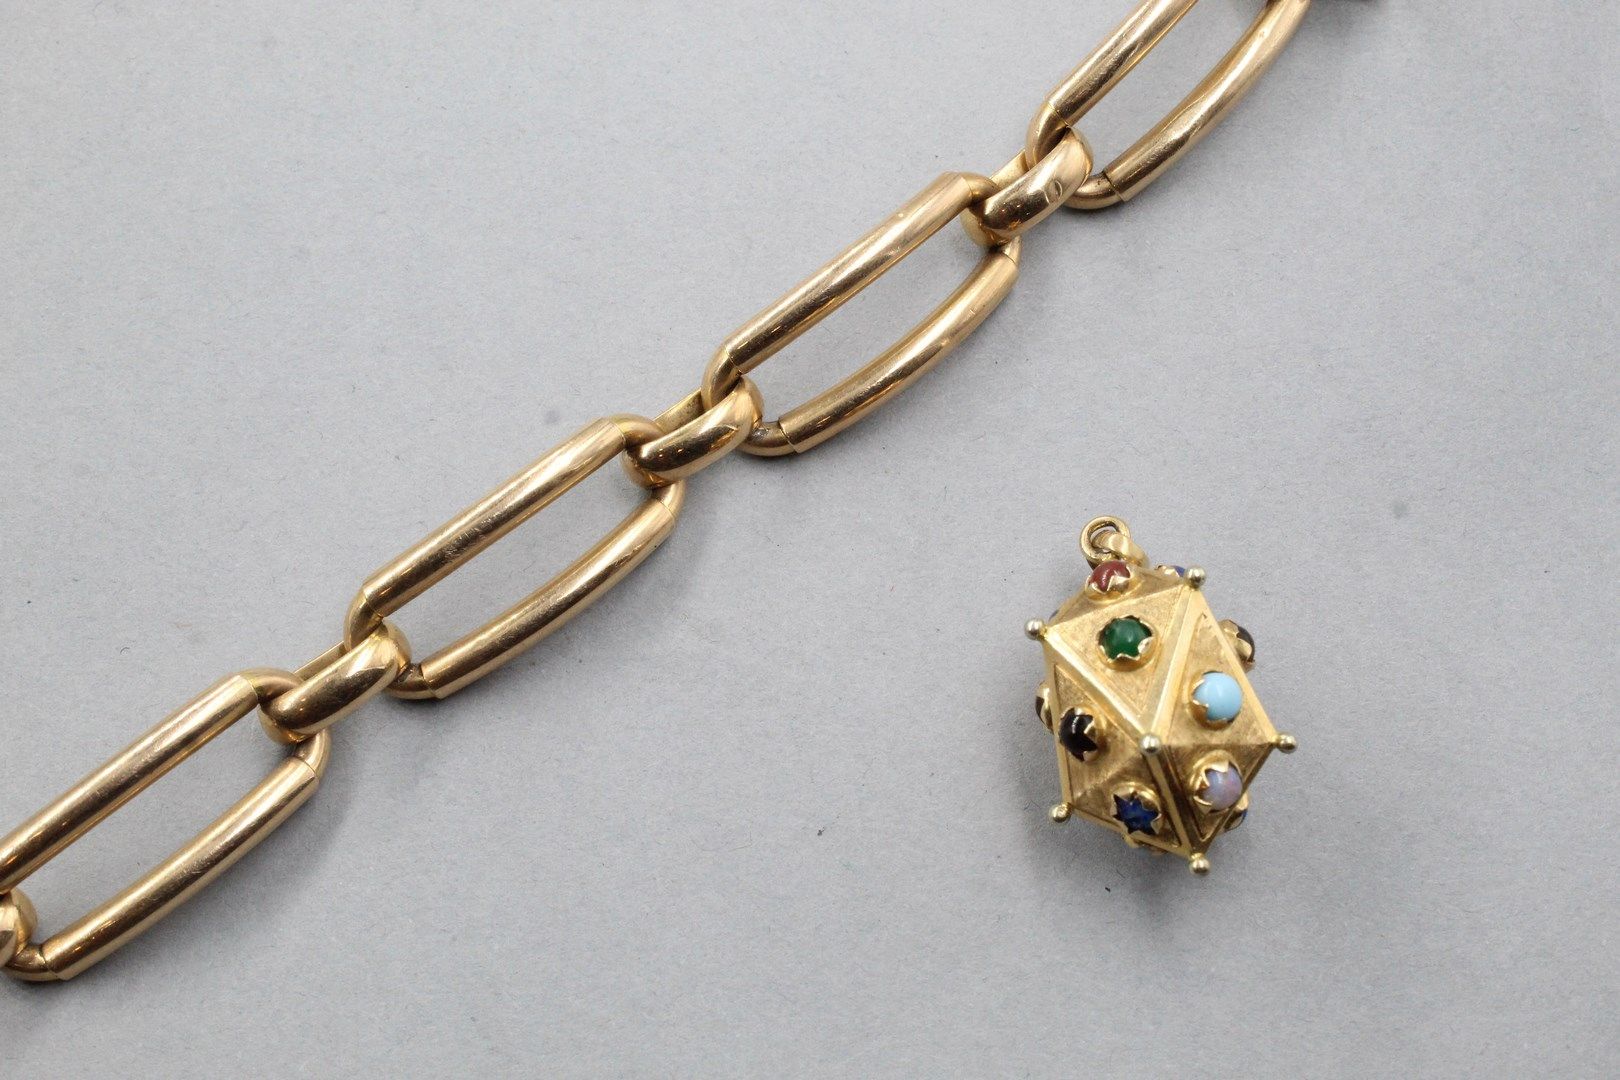 Null 18K（750）玫瑰金手镯。

手腕尺寸：约20.5厘米

附有一个18K黄金吊坠，上面有装饰性的凸圆形宝石。

毛重：24.40克。